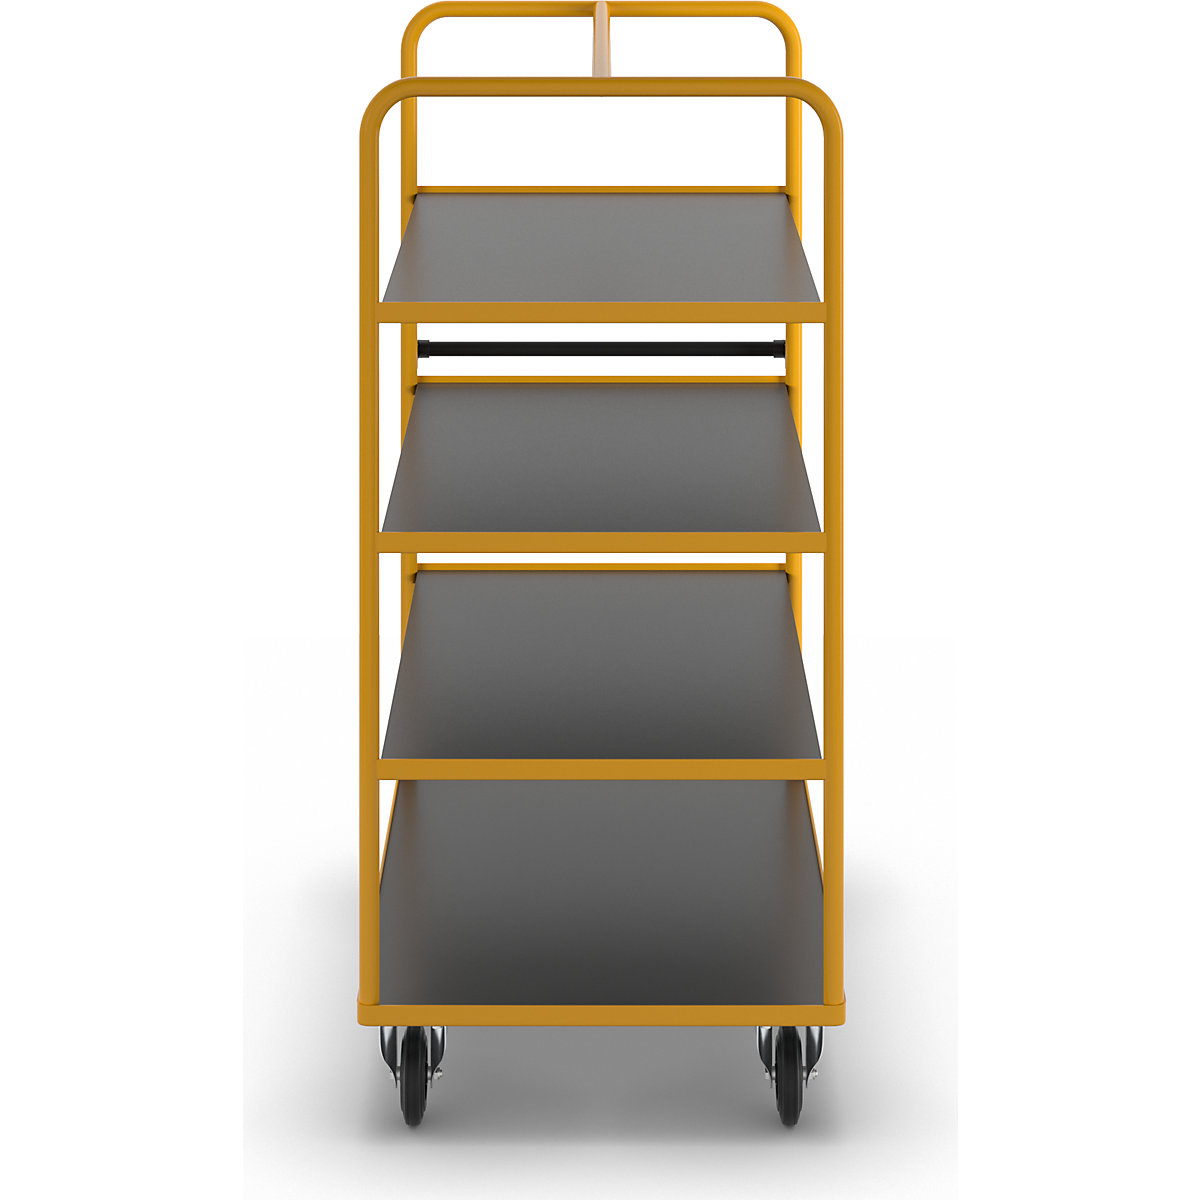 Professional shelf and platform truck (Product illustration 9)-8